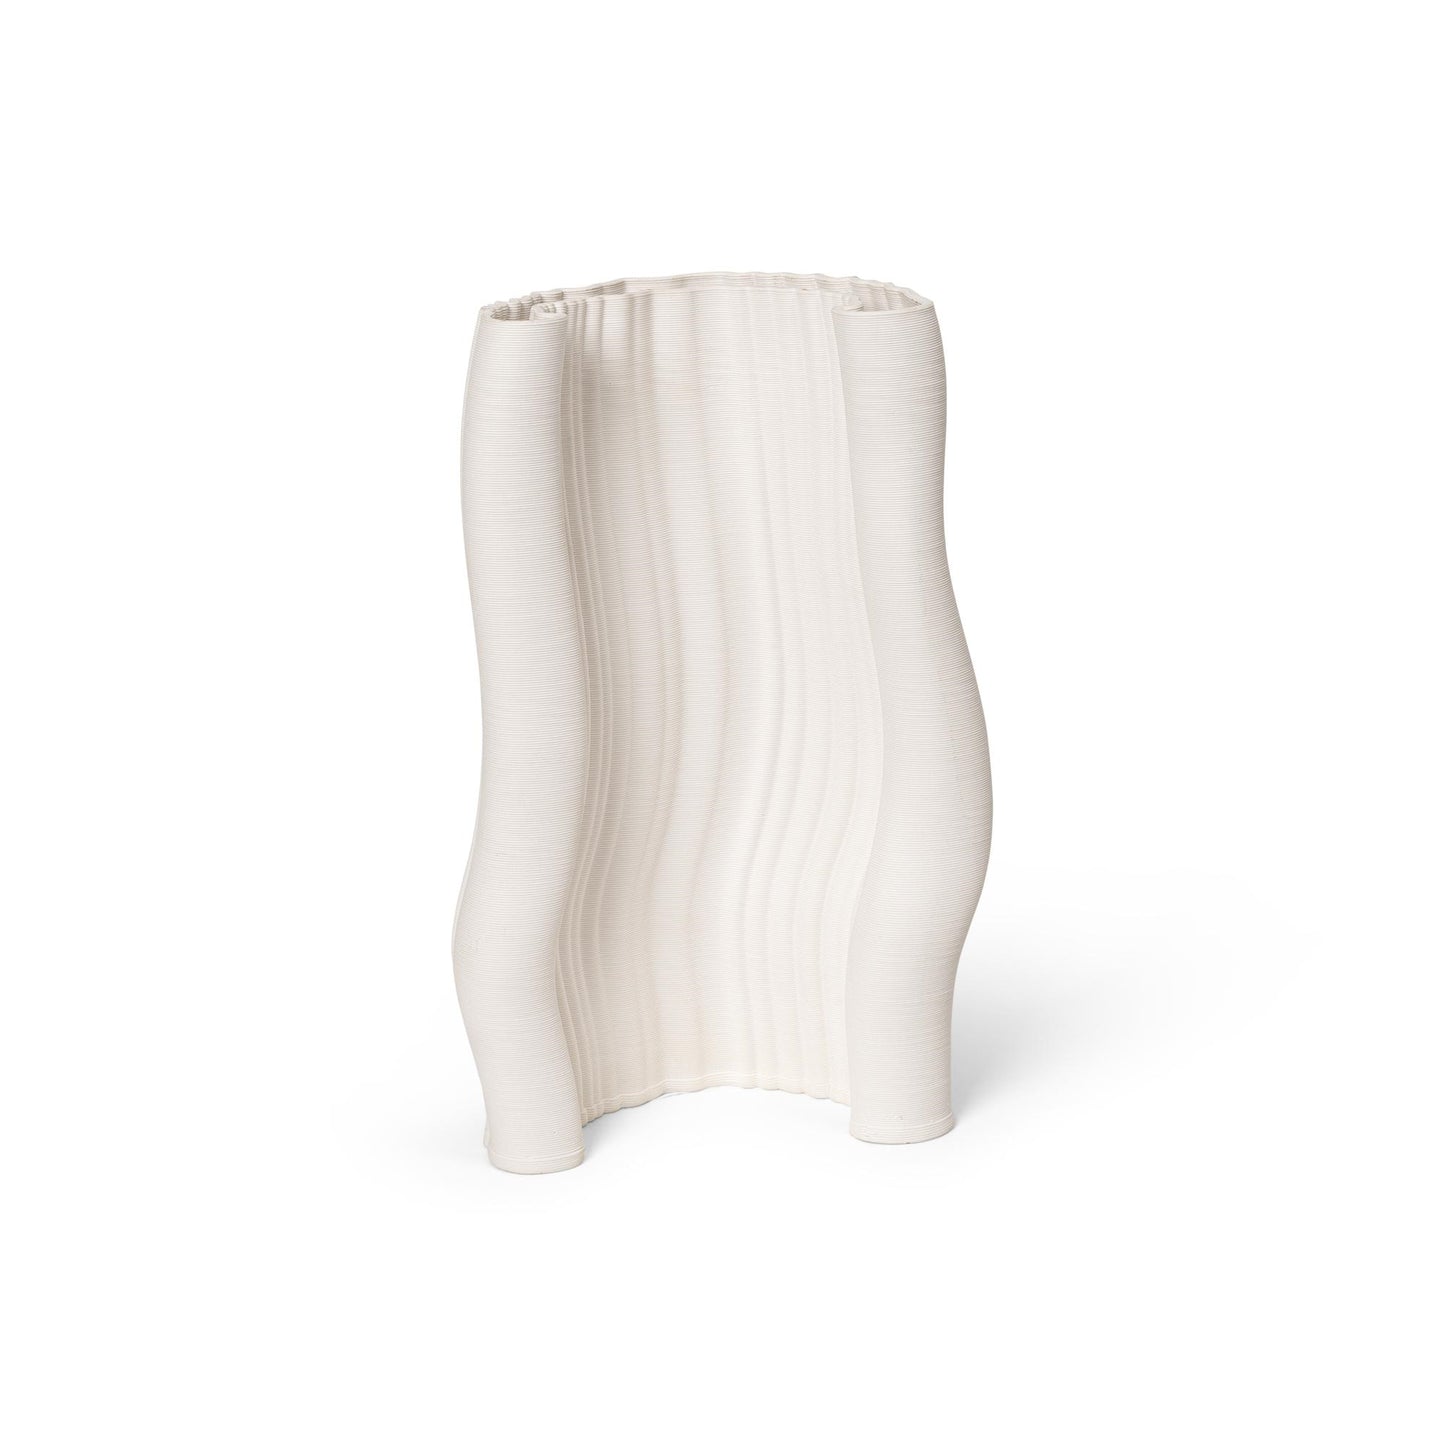 Moire Vase by Ferm Living #Off white